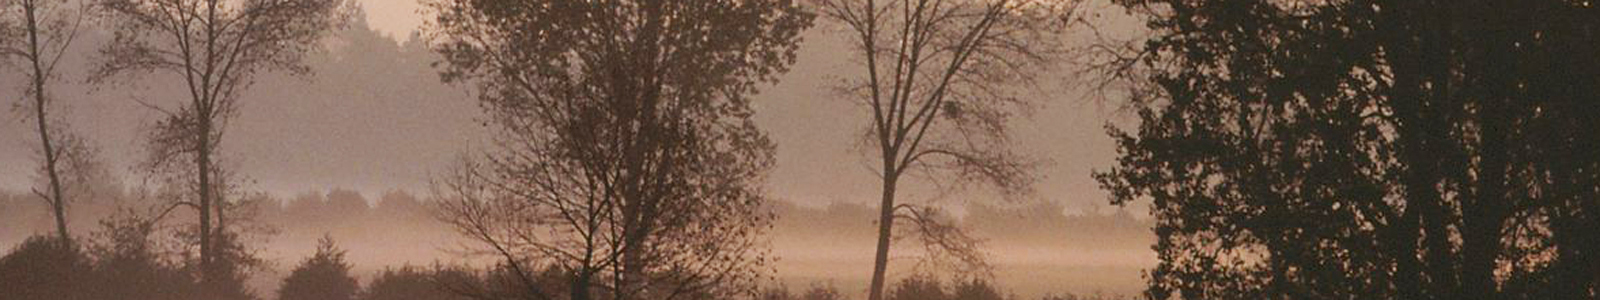 Bäume im Nebel ©Feuerbach